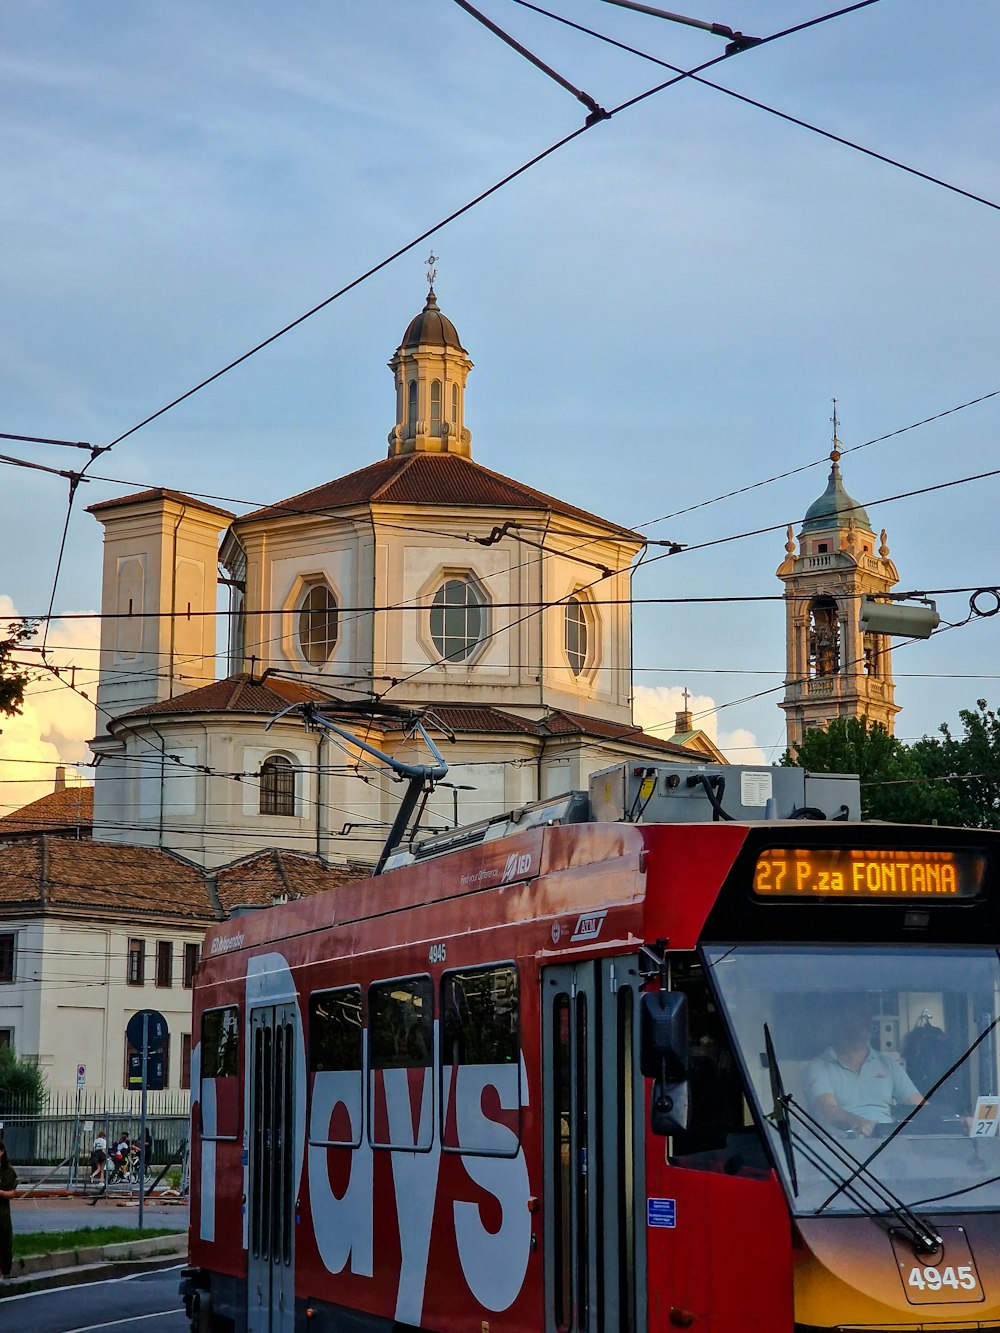 a red bus driving down a street next to a church